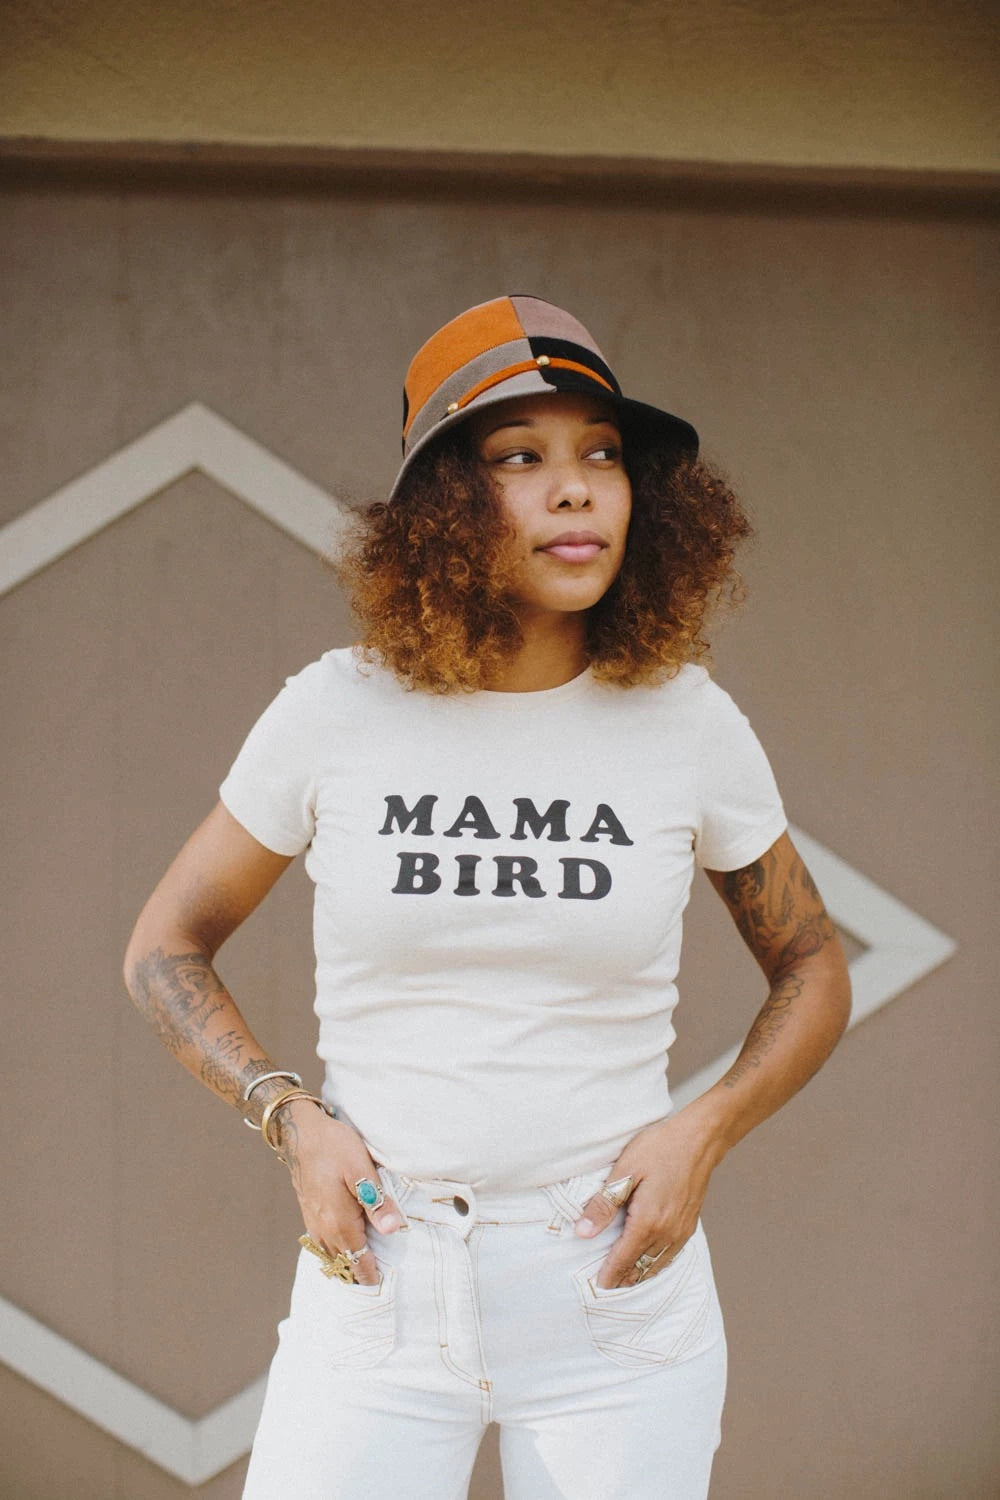 Mama Bird, The Original Tee